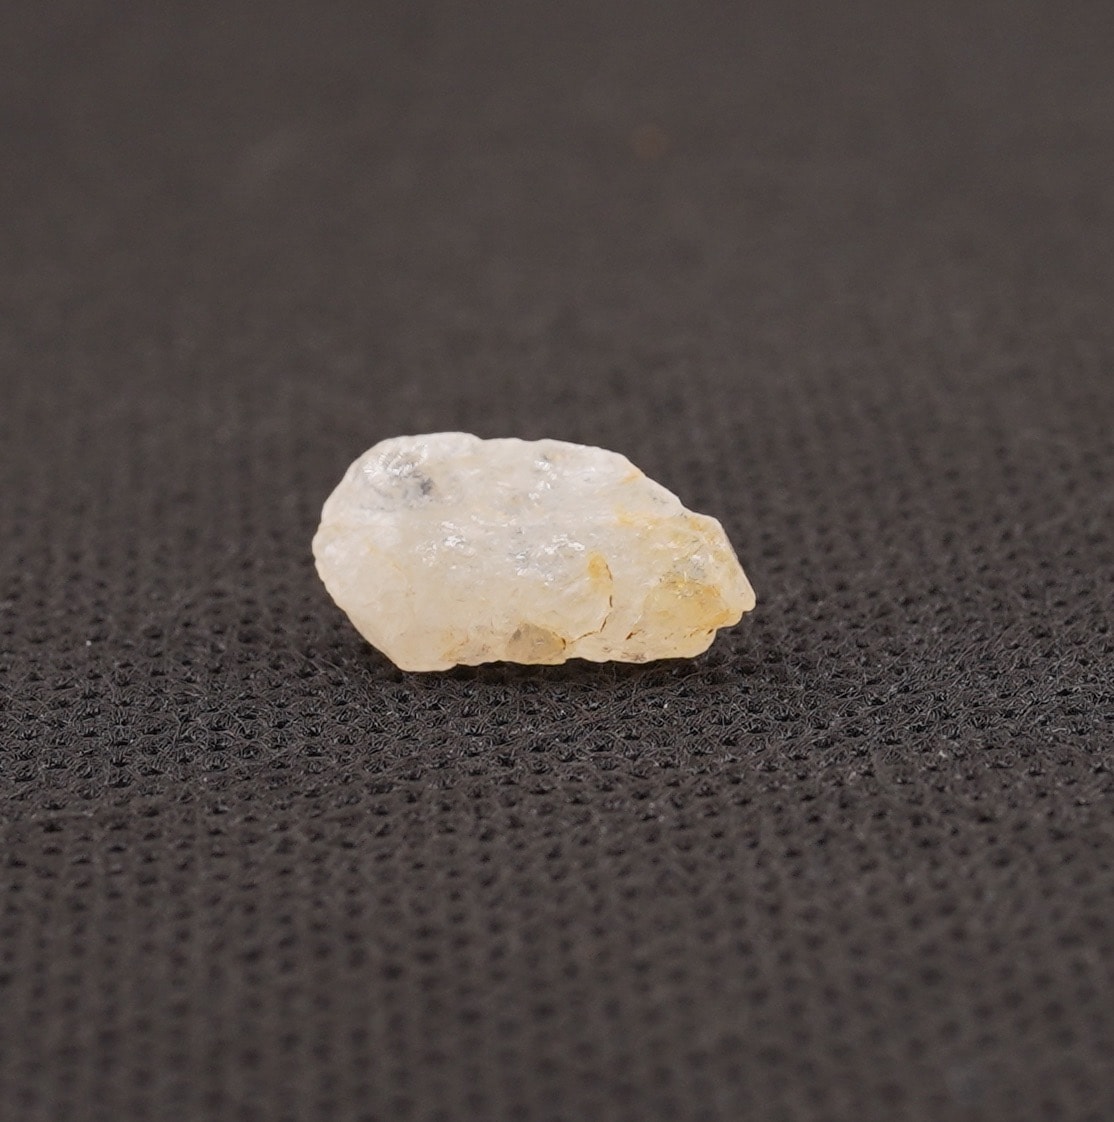 Fenacit nigerian cristal natural unicat f204